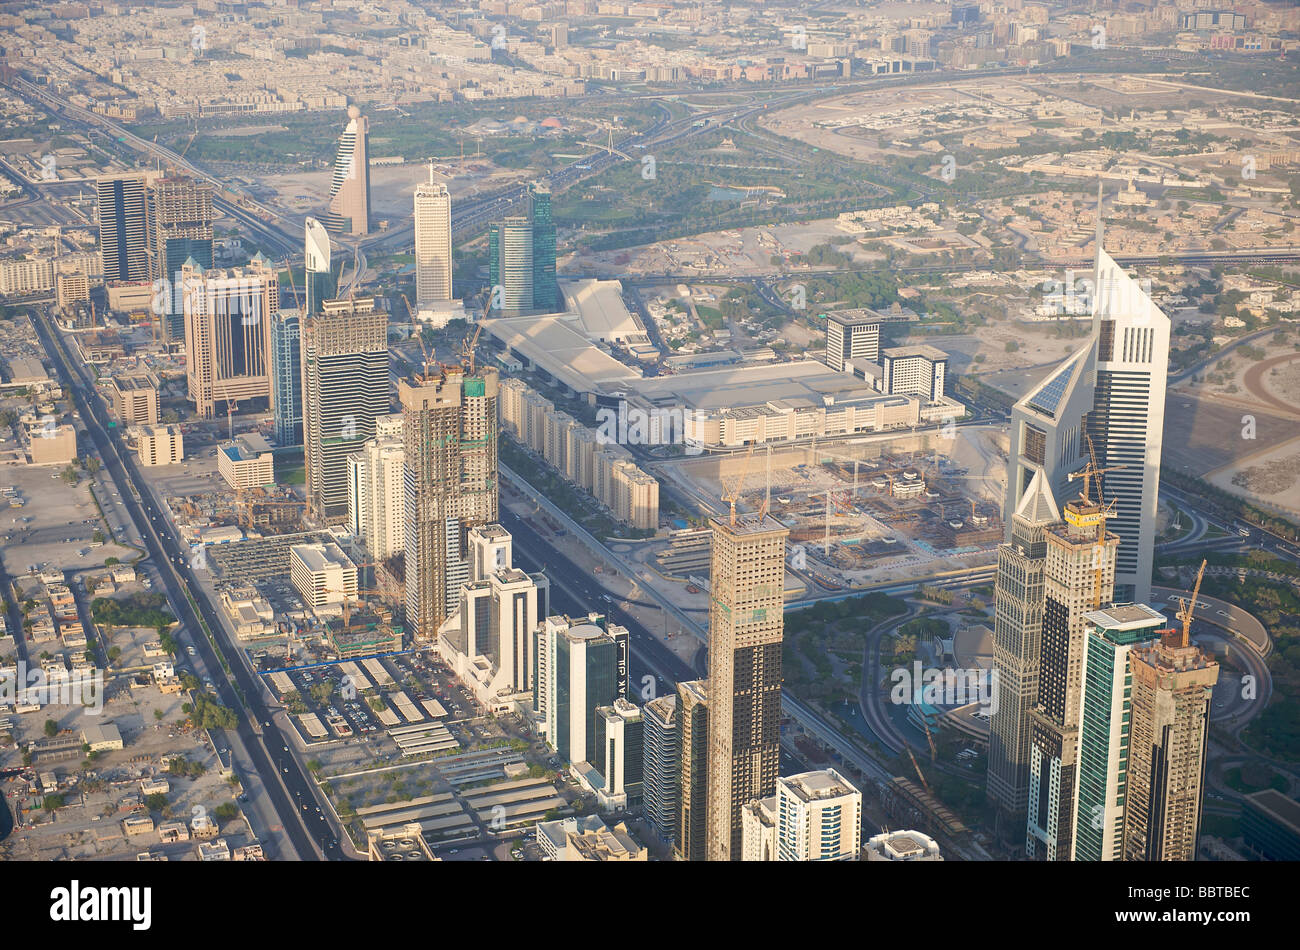 Dubai the sheikh zayed road area Stock Photo